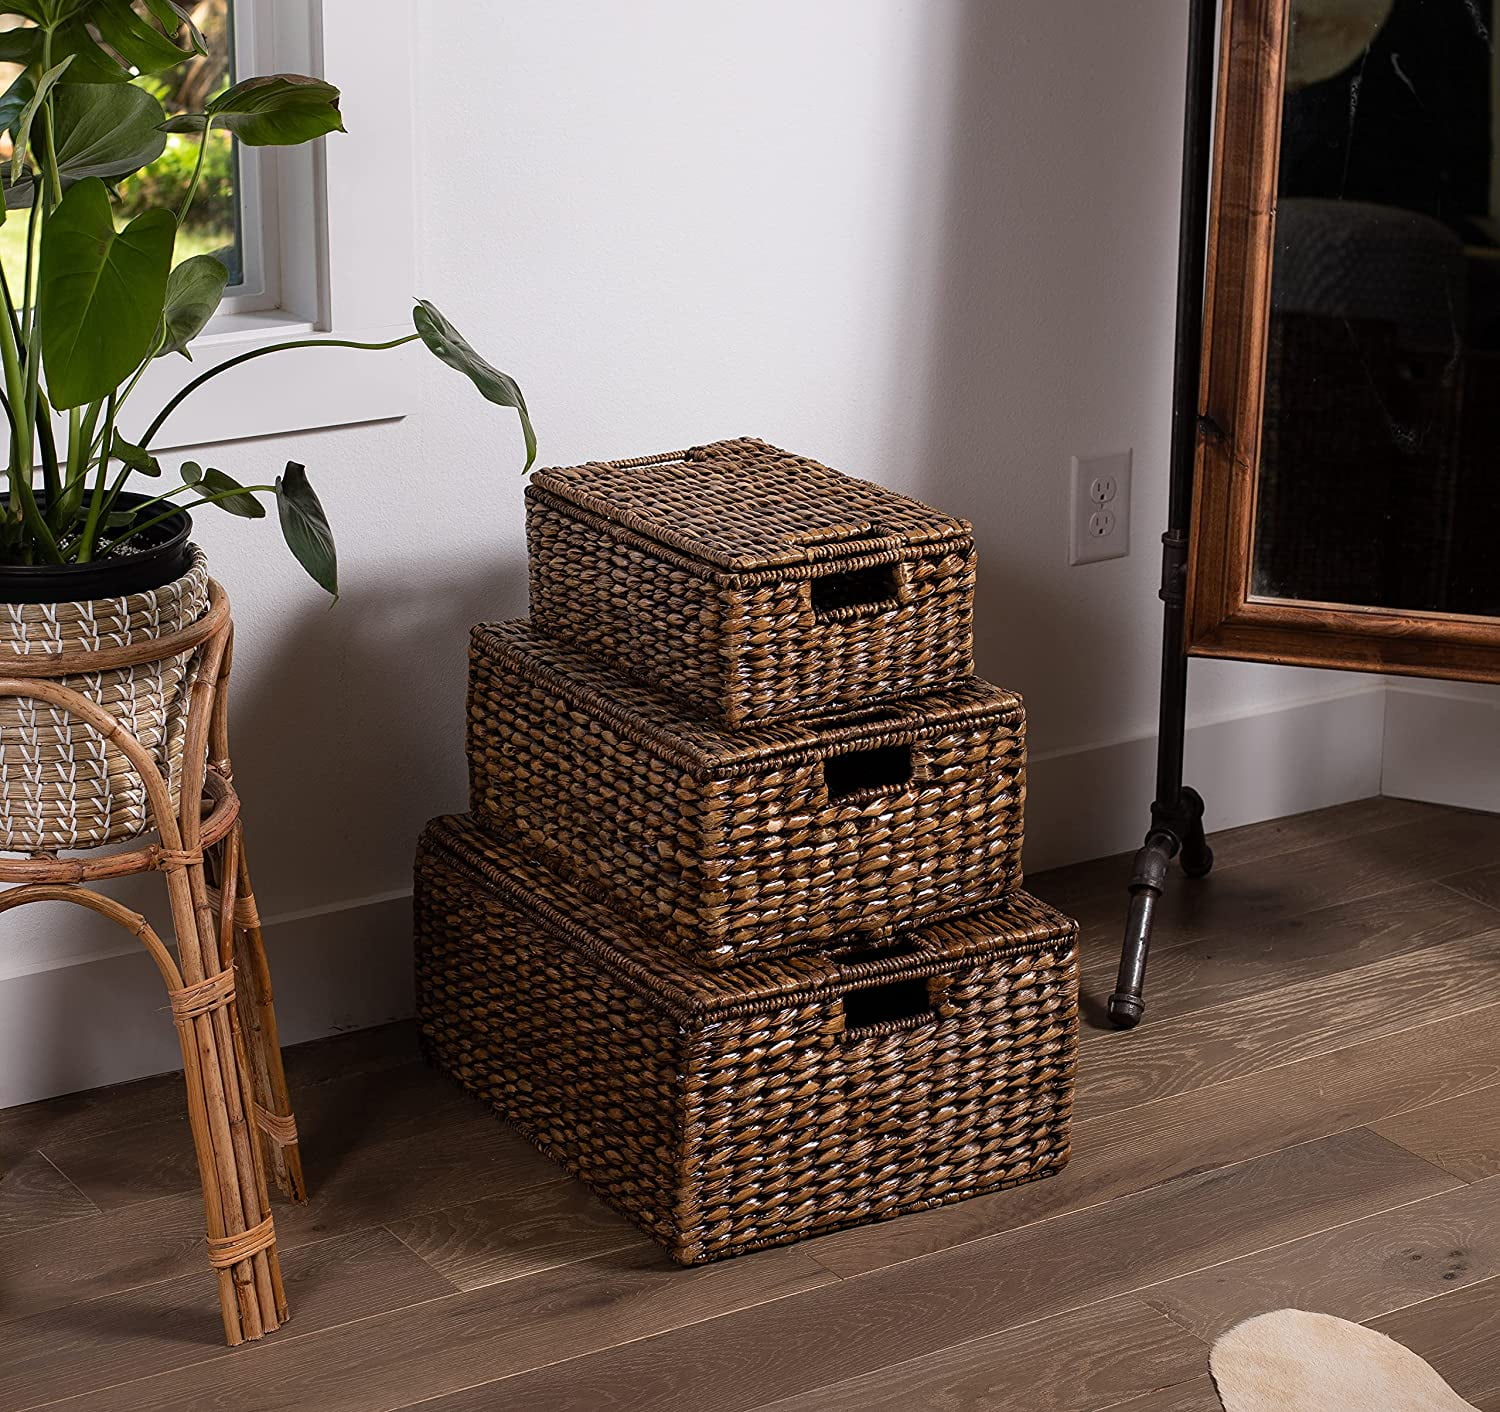 Birdrock Home Storage Shelf Baskets with Handles - Set of 3 - Abaca Seagrass Wi